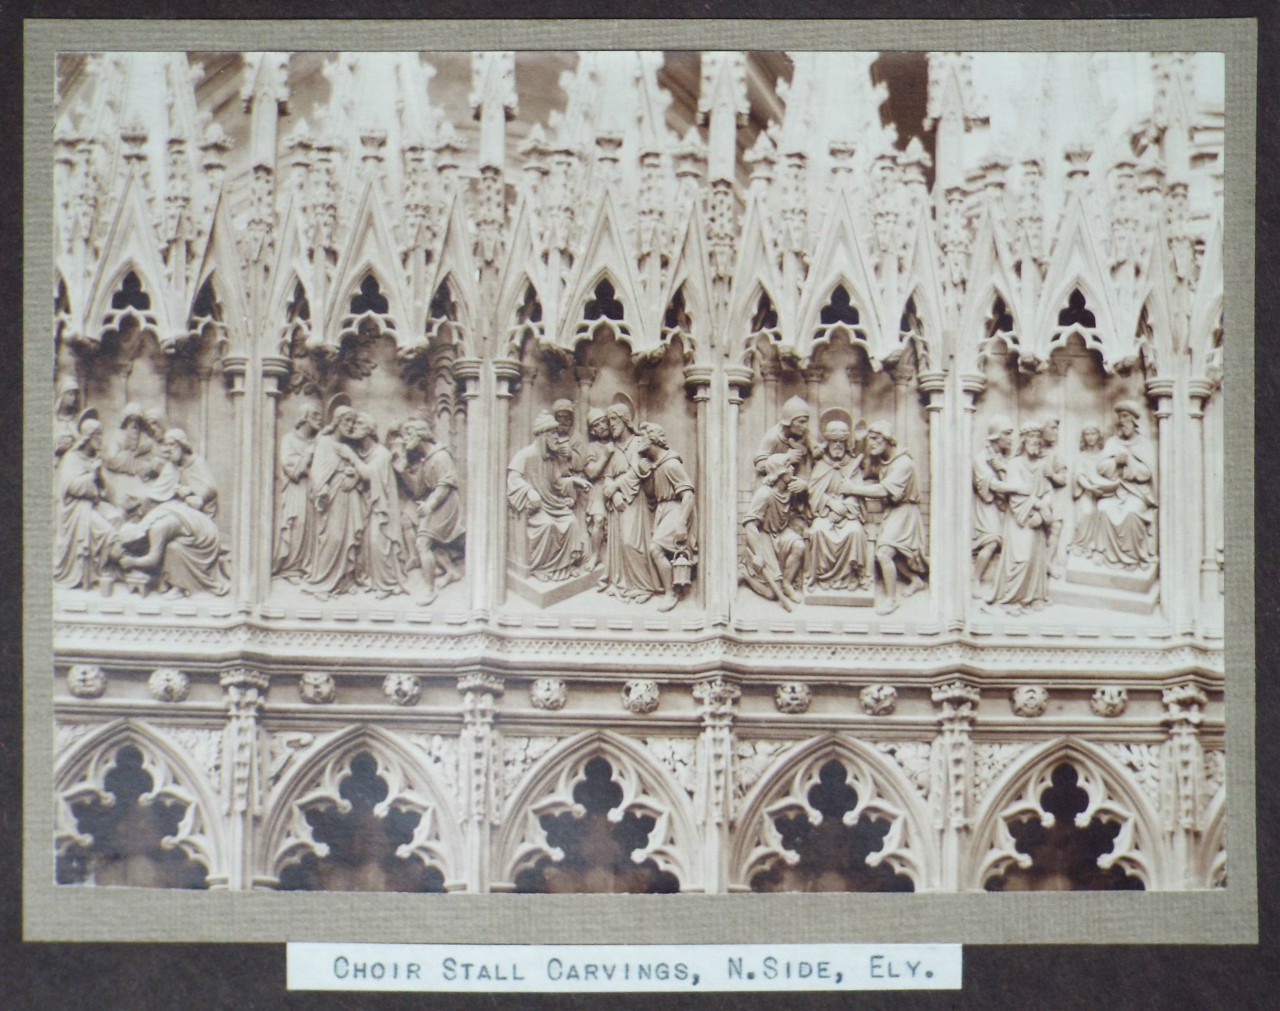 Photograph - Choir Stall Carvings, N. Side, Ely.